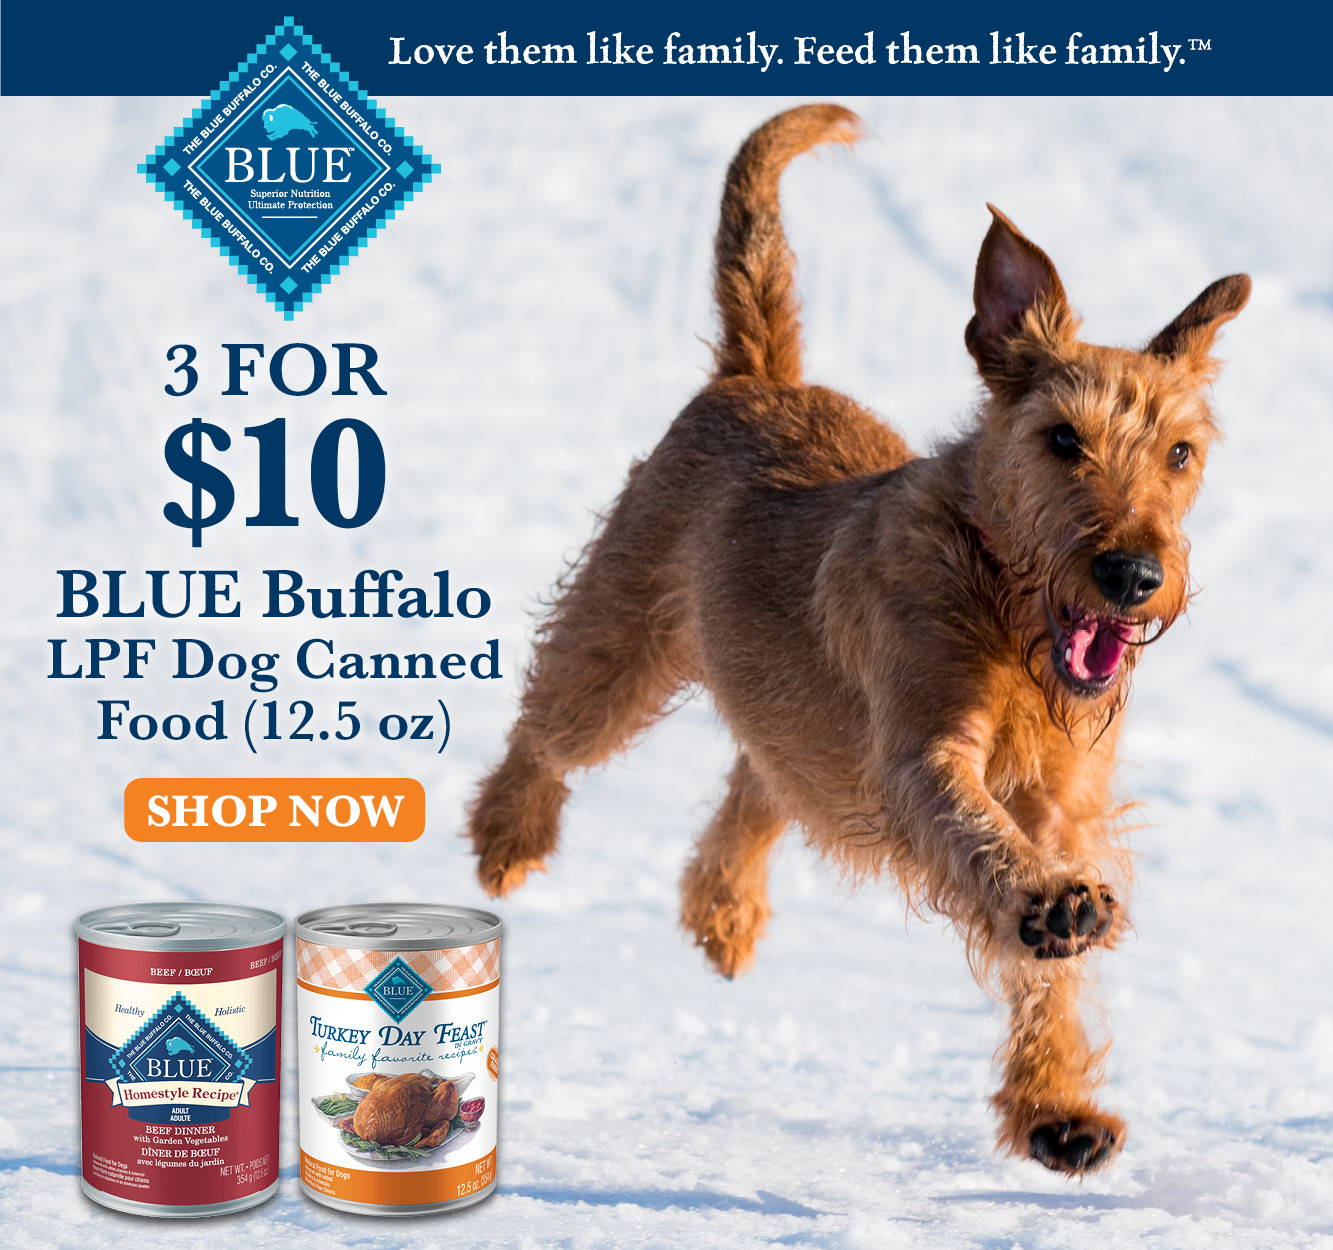 3 for $10 Blue Buffalo LPF Dog Canned Food 12.5 oz